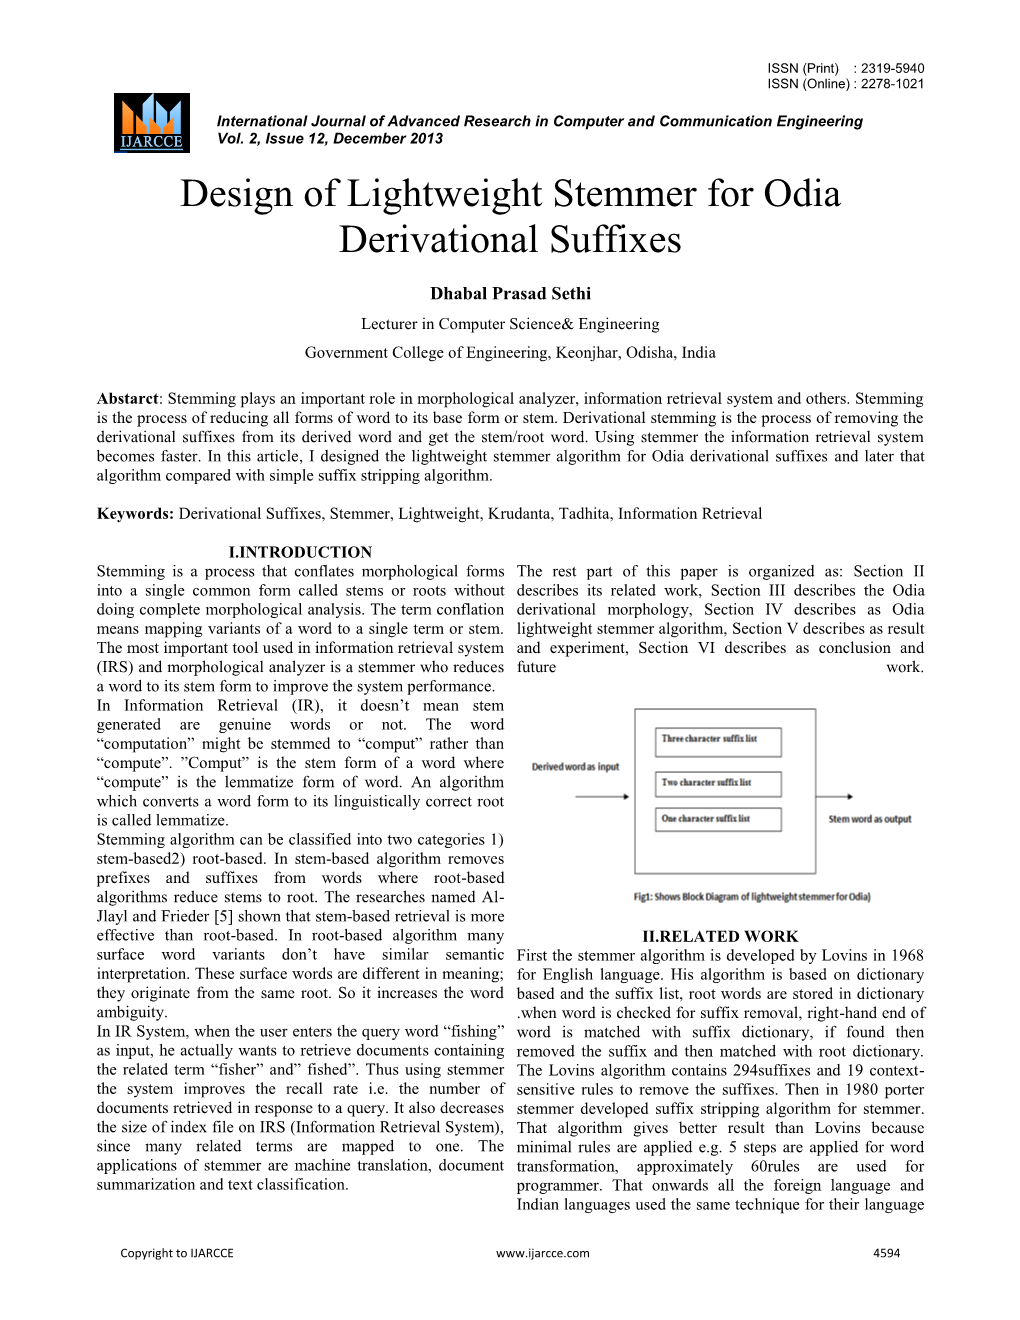 Design of Lightweight Stemmer for Odia Derivational Suffixes